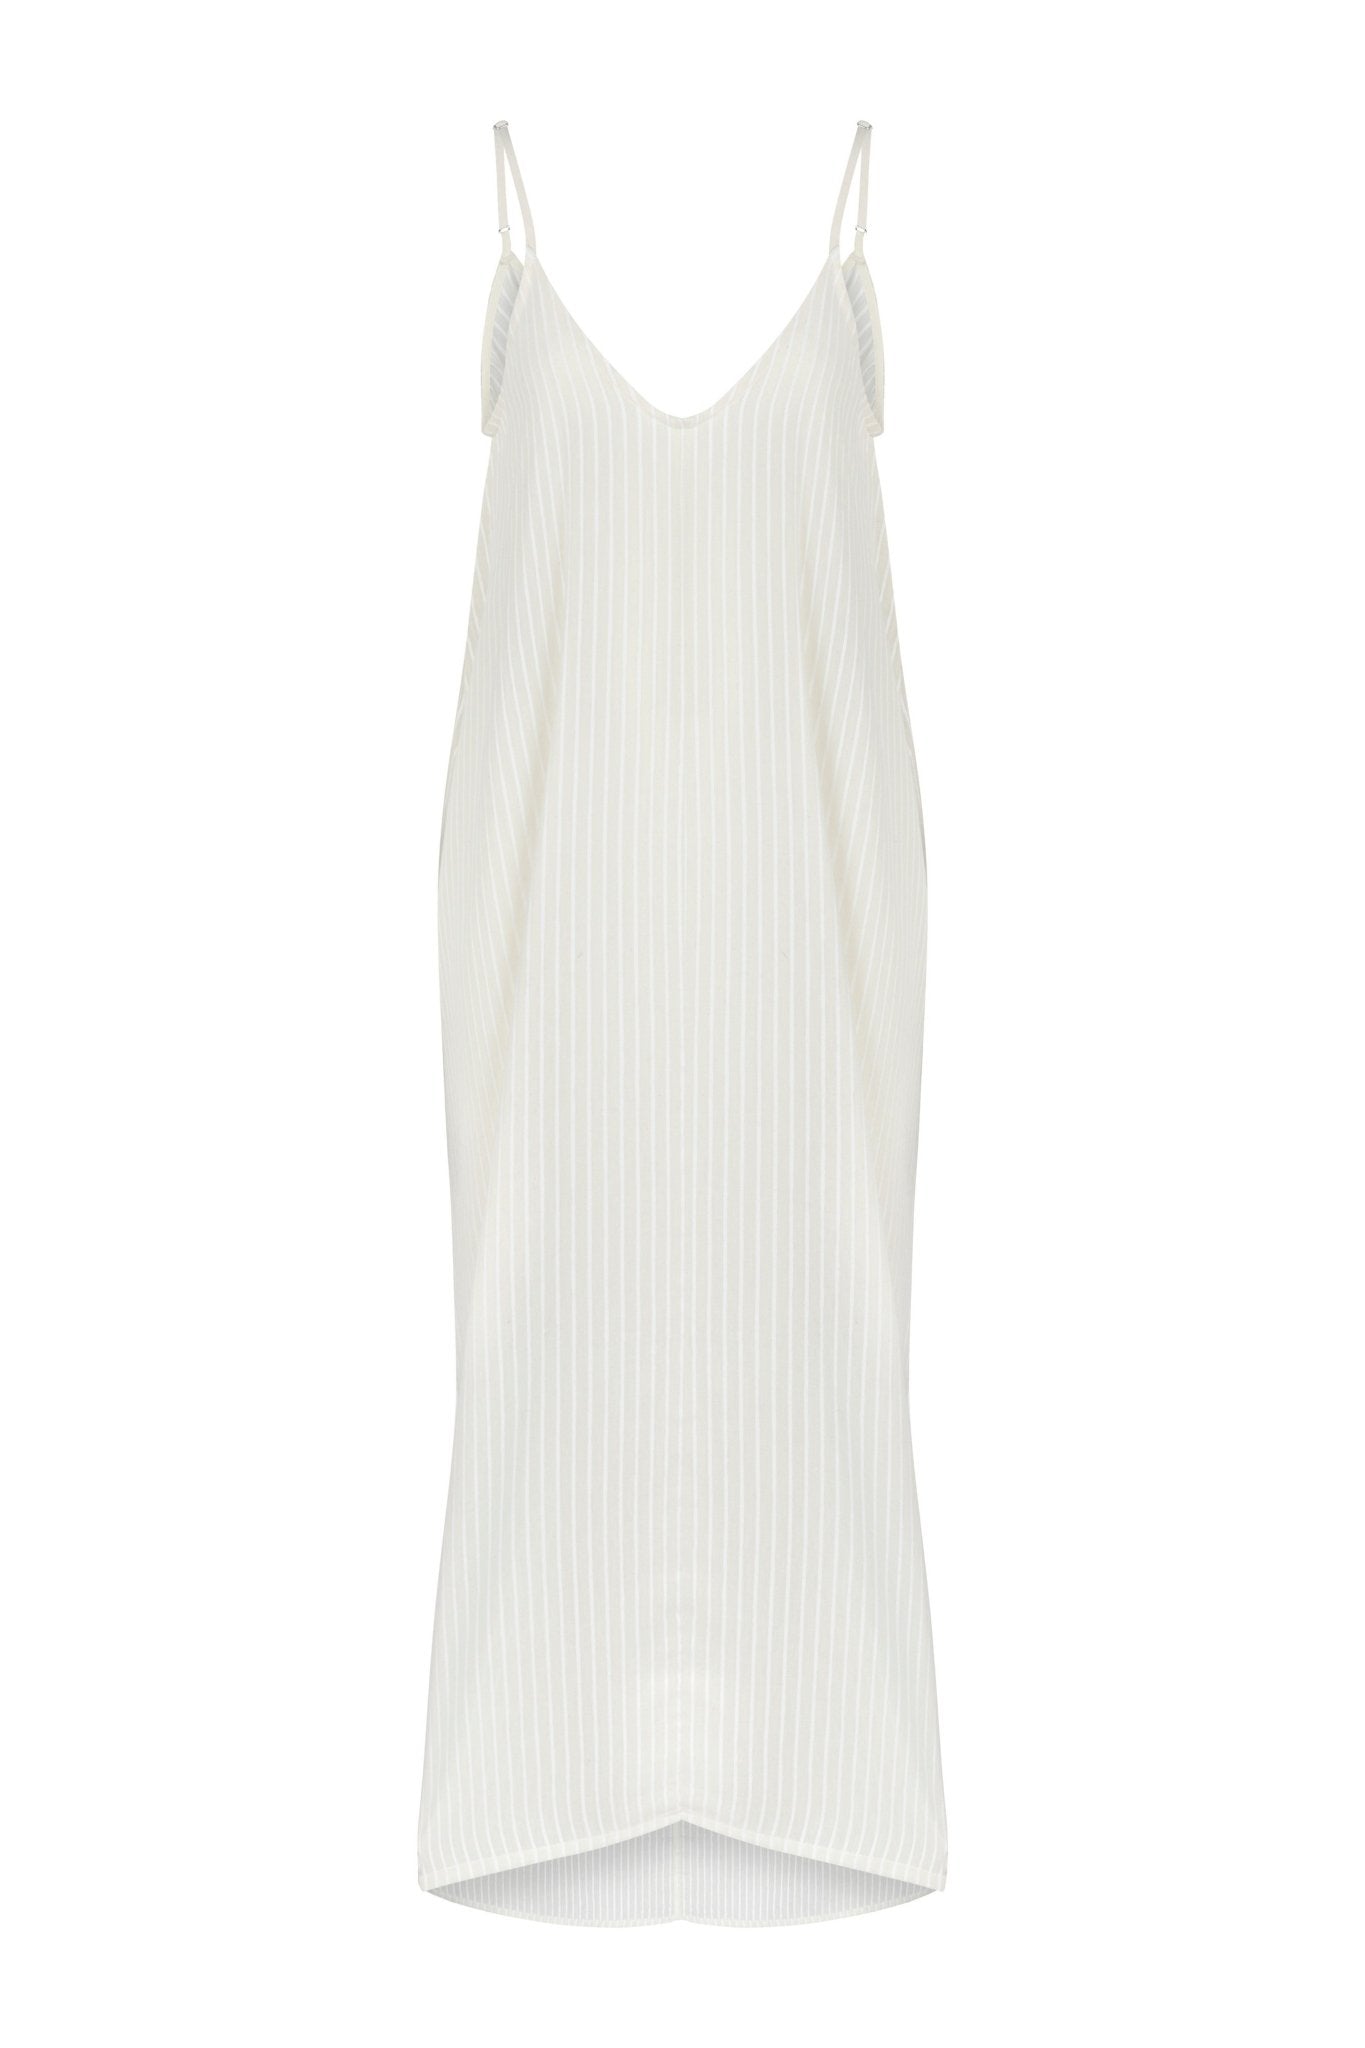 Yaz Dress - White Stripes by The Handloom